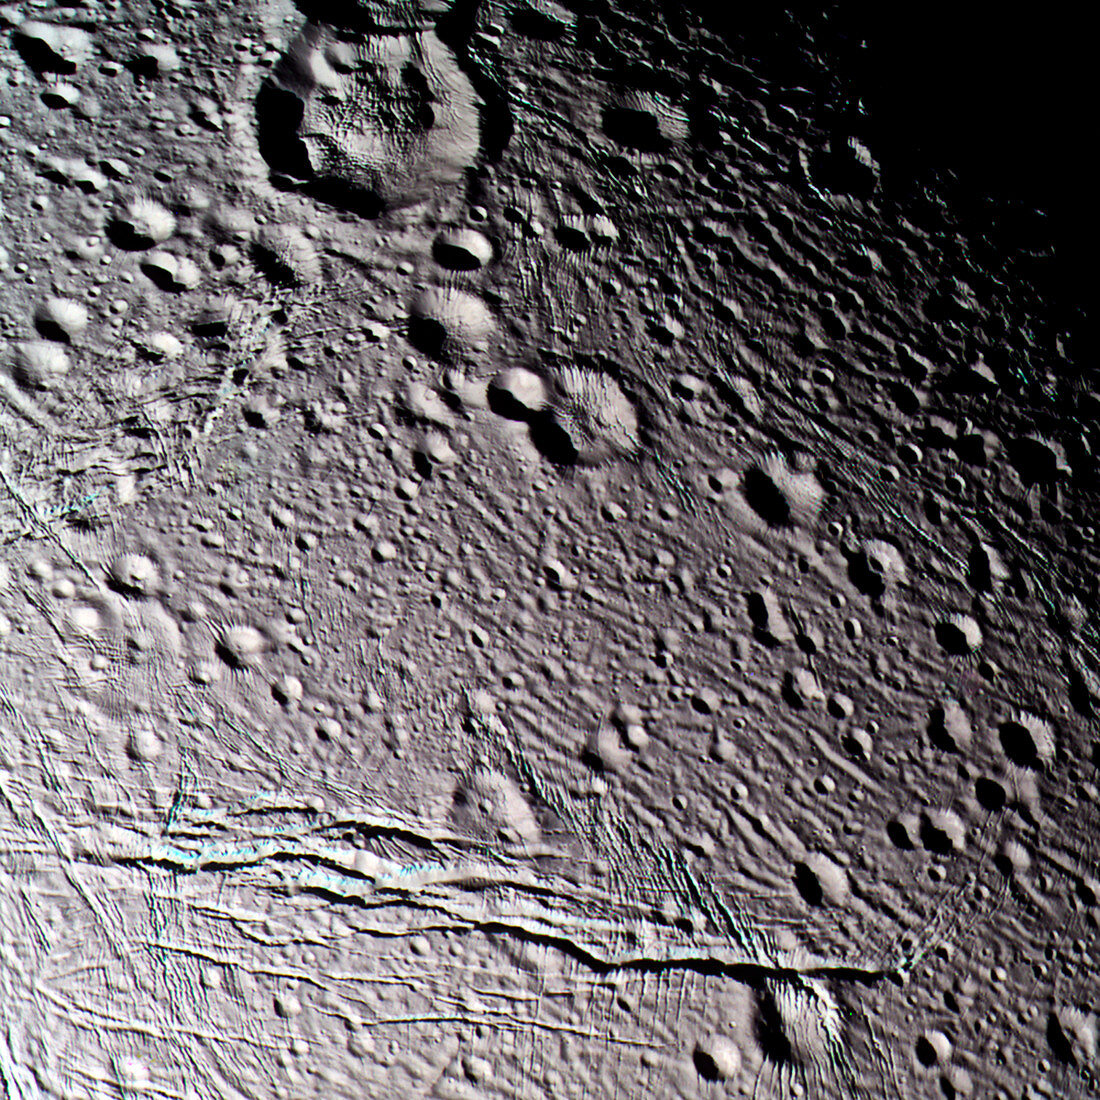 Enceladus' surface